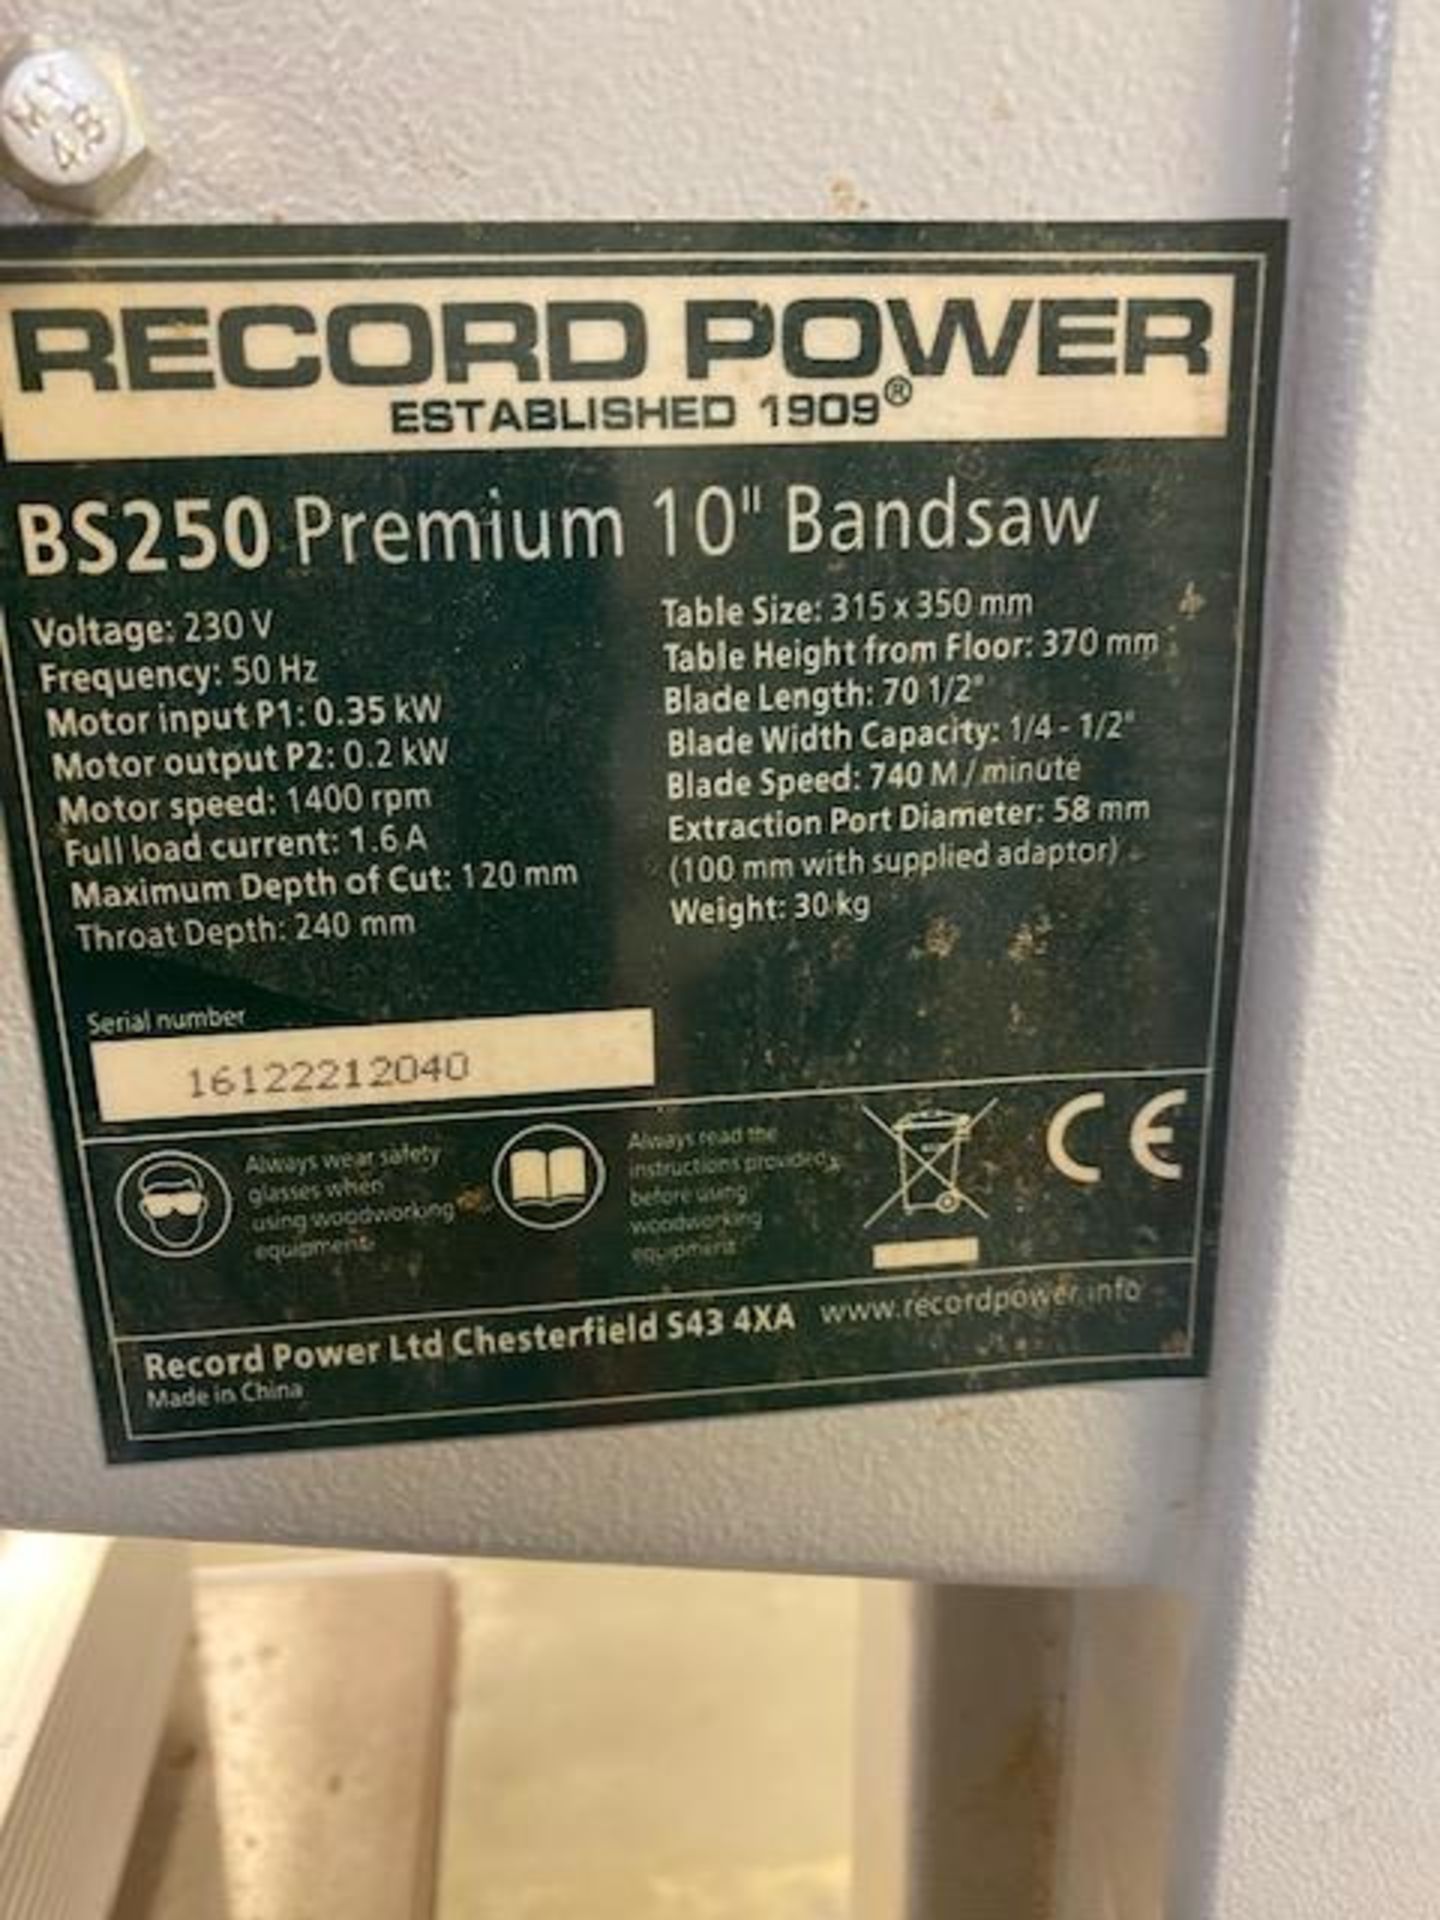 Record Power B5250 premium 10" bandsaw S/N 16122212040 - Image 3 of 4